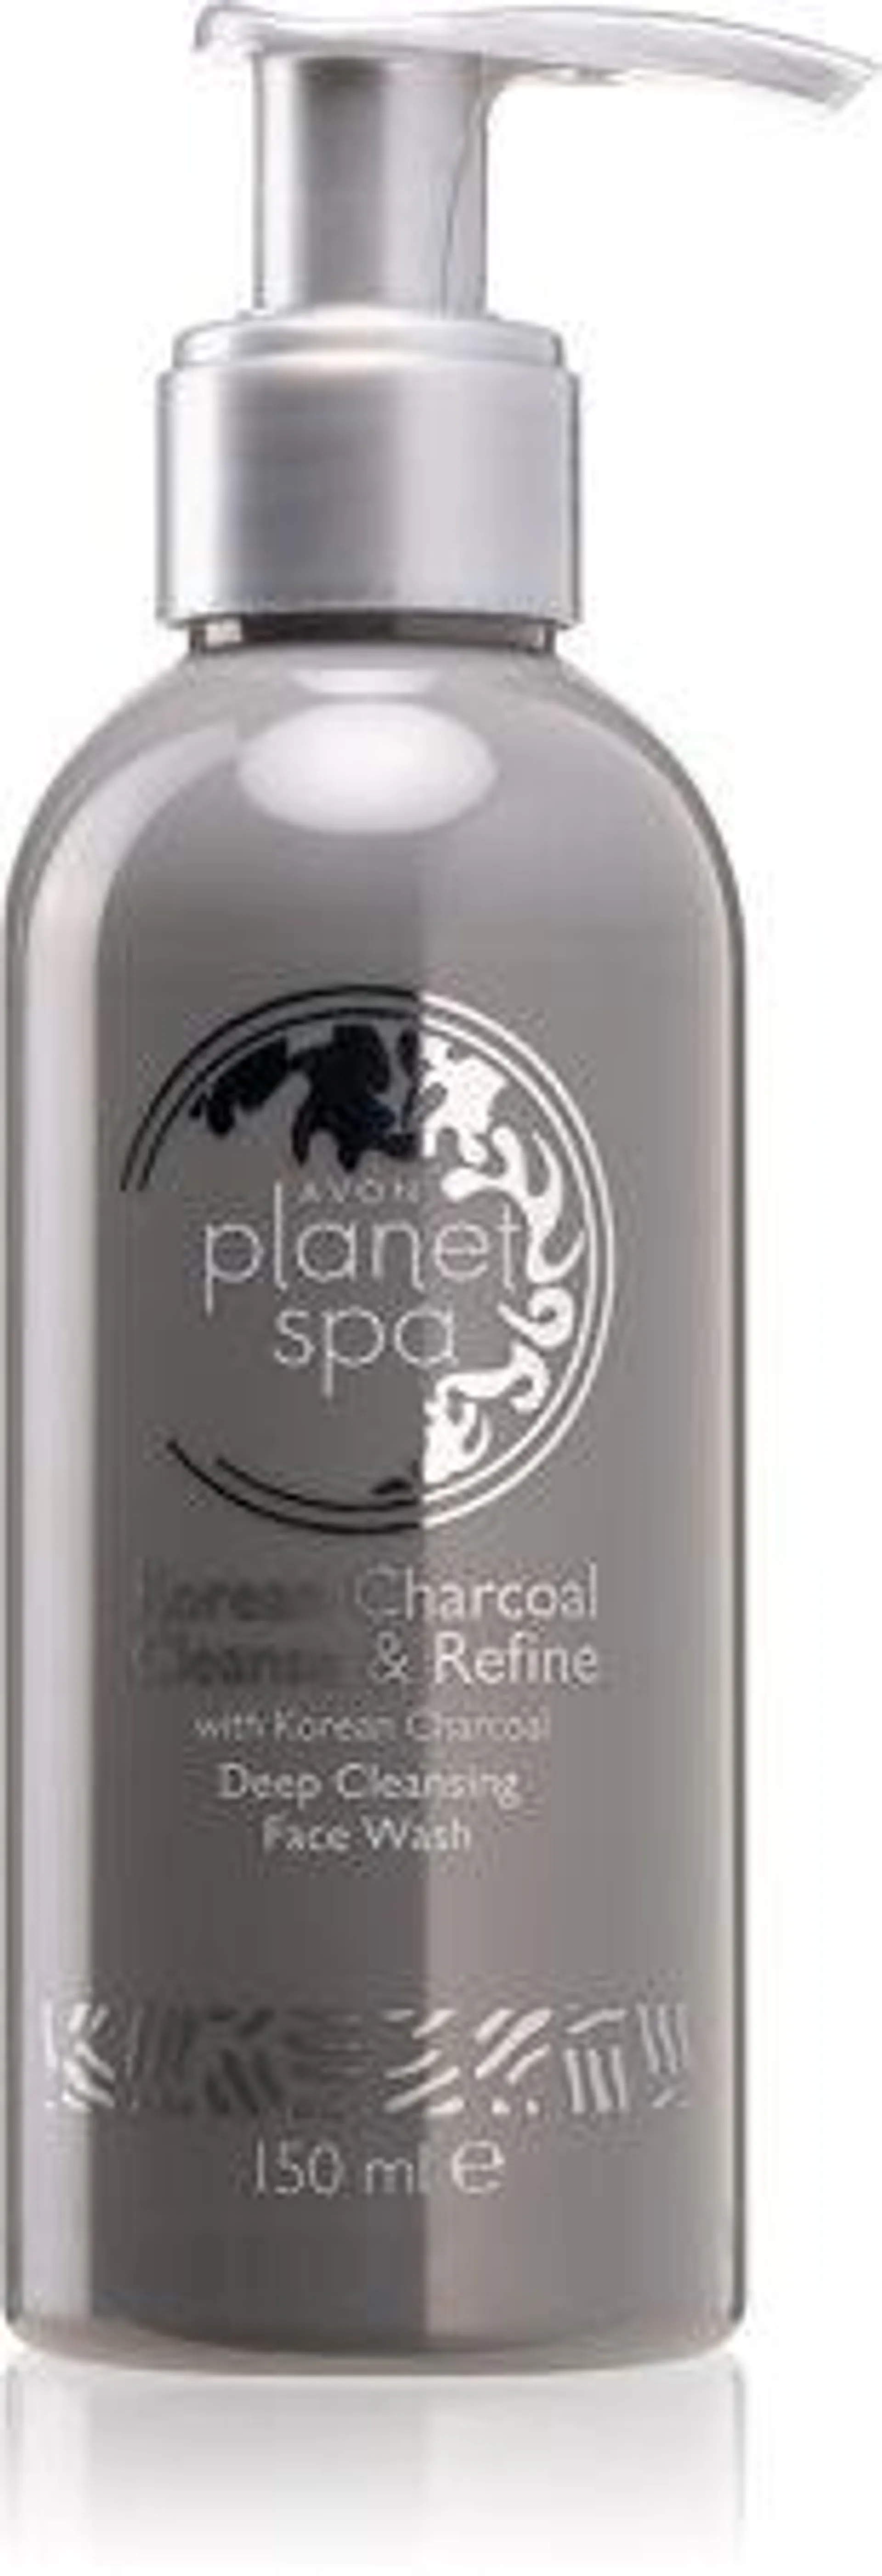 Planet Spa Korean Charcoal Cleanse & Refine